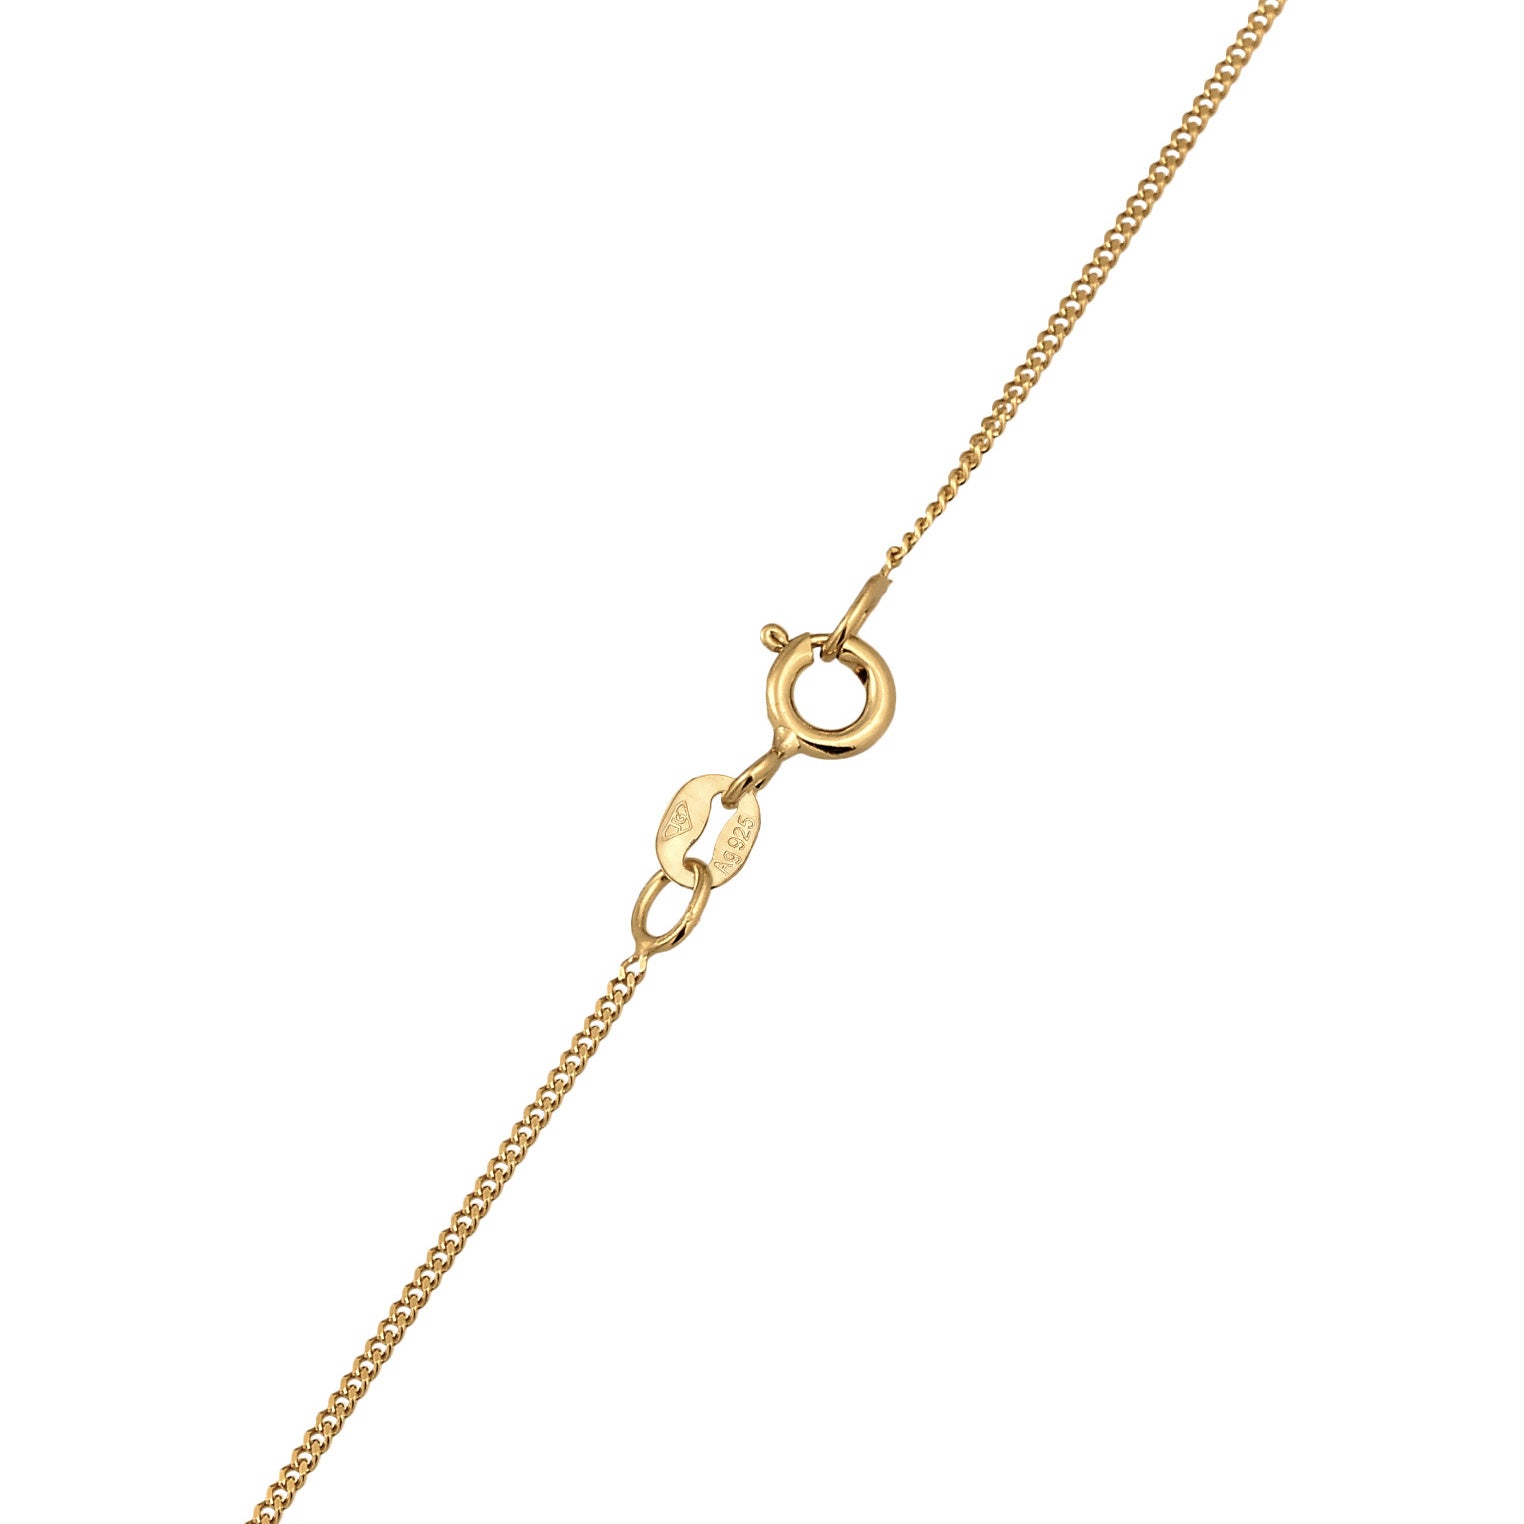 Gold - Elli | Halsketter Solitär Herz | Kristall (Weiß) | 925er Sterling Silber Vergoldet